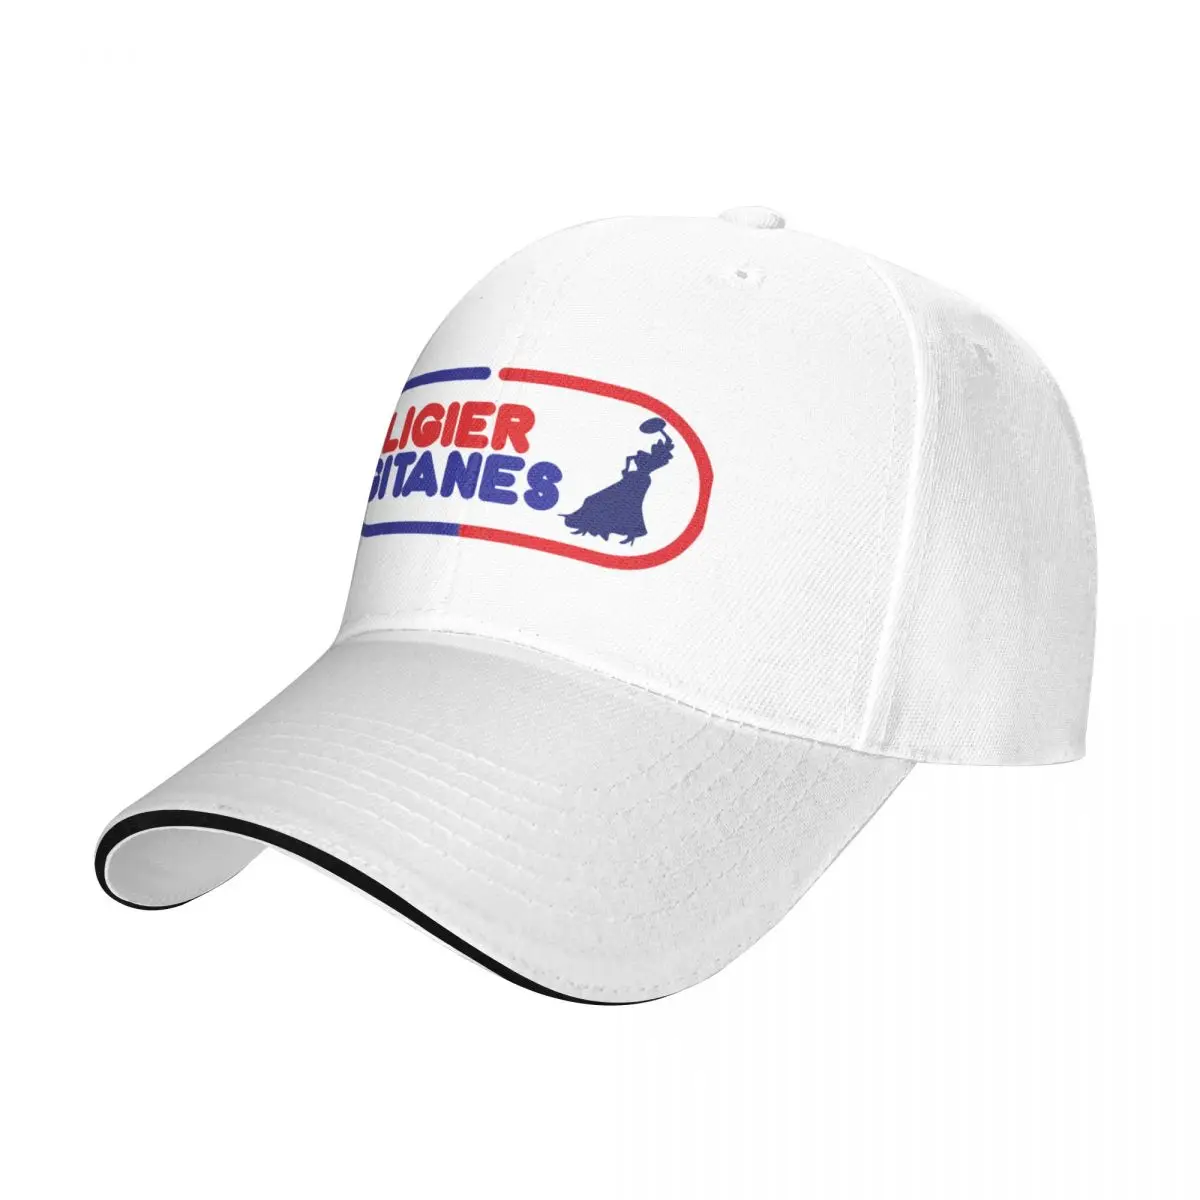 Ligier Gitanes Logotipo Gorra de Béisbol Sombrero de Sol Para Niños Caballo Sombrero de los Hombres Gorras de Mujer . ' - ' . 1